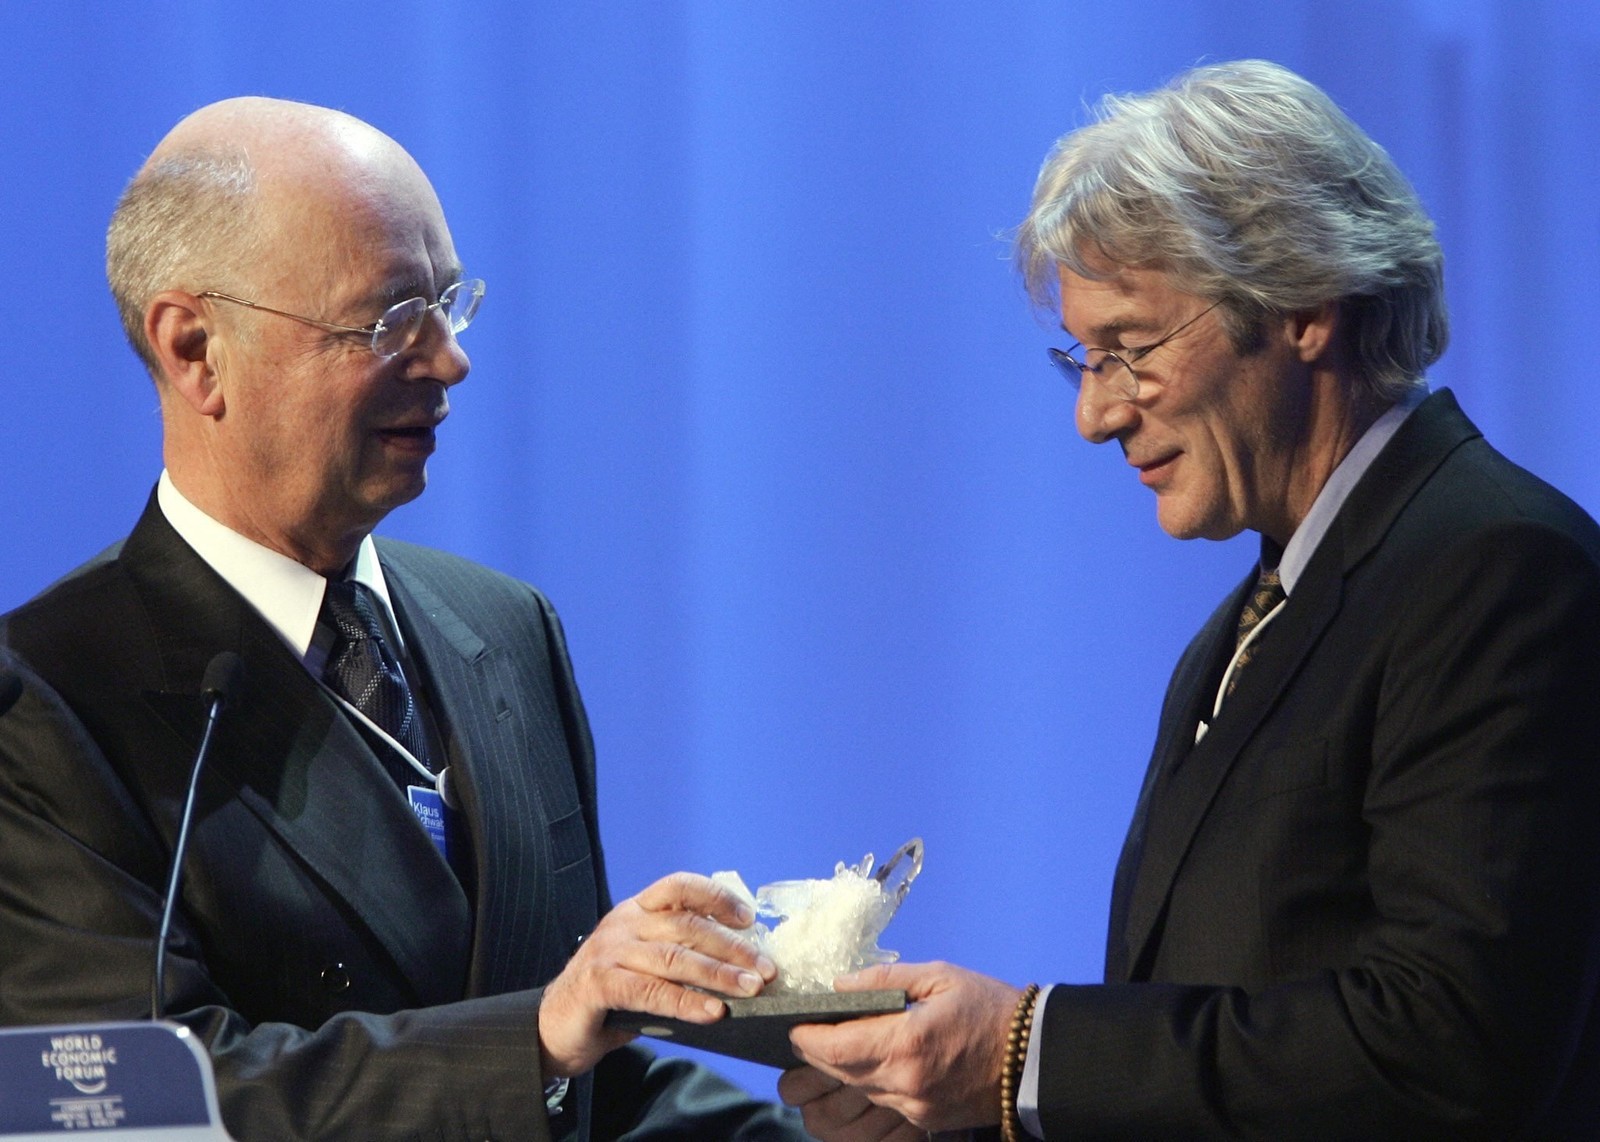 O ator Richard Gere recebe o prêmio Crystal de manos de Klaus Schwab, fundador do foro de Davos, no Foro Económico Mundial de Davos, Suiza - Foto arquivo